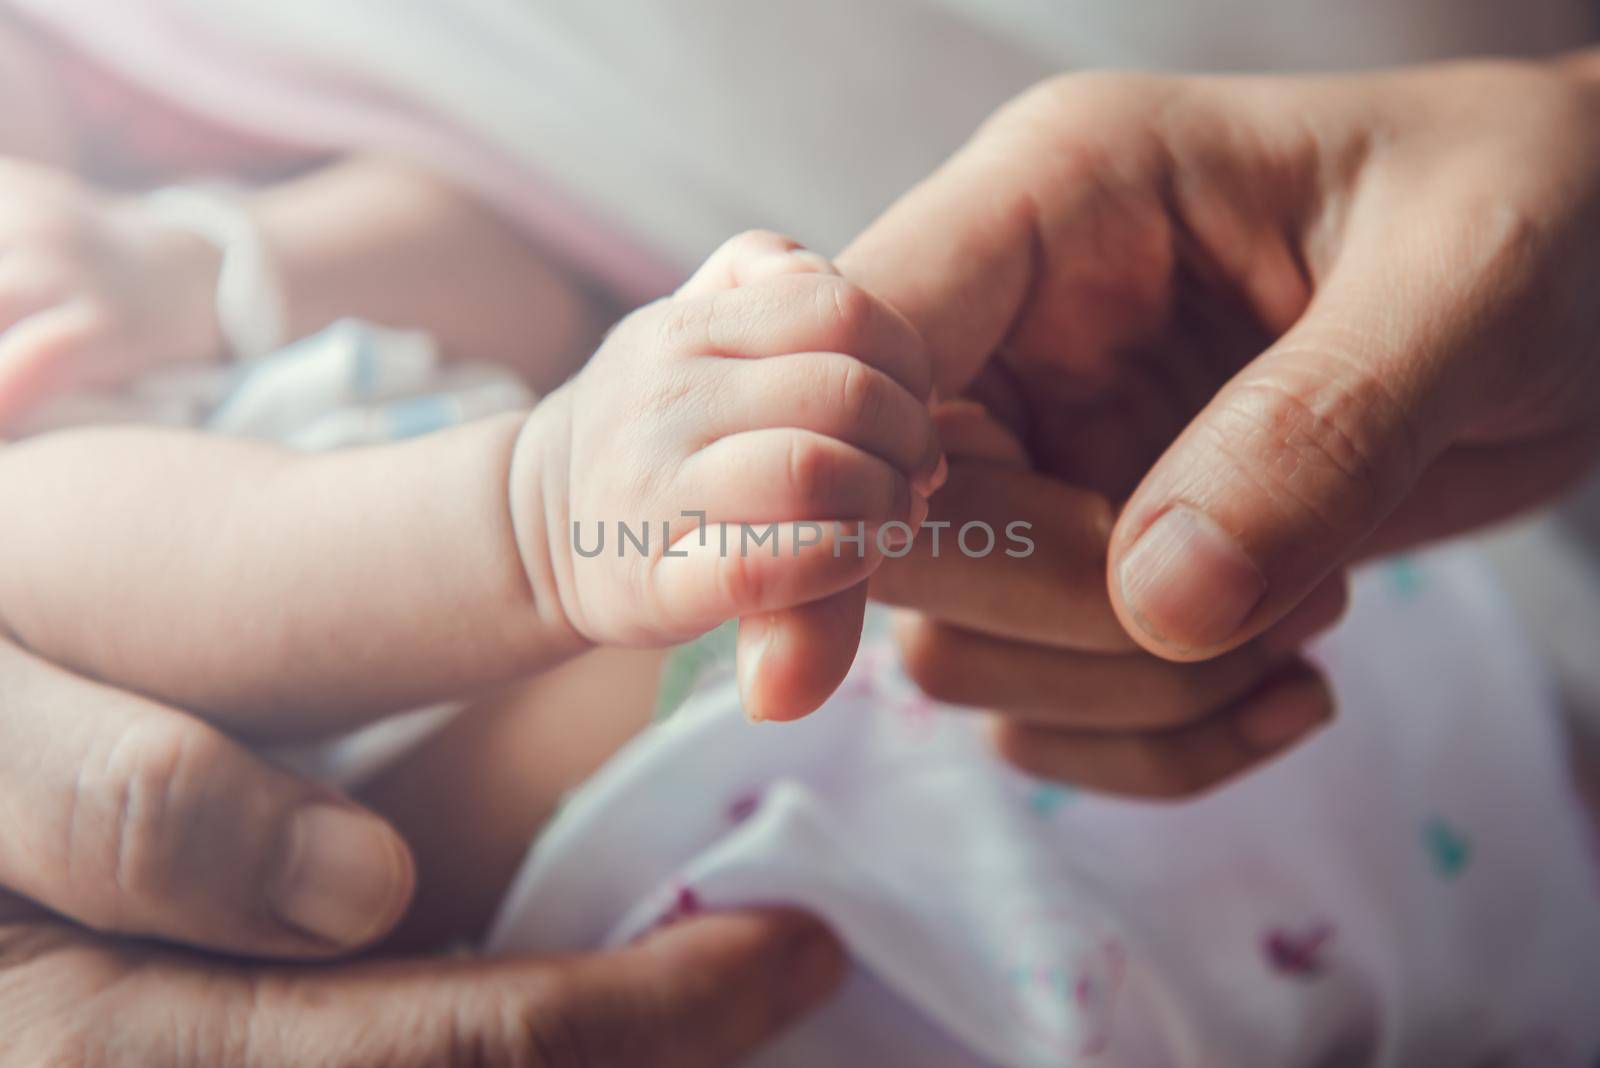 Newborn baby holding mother's hand.